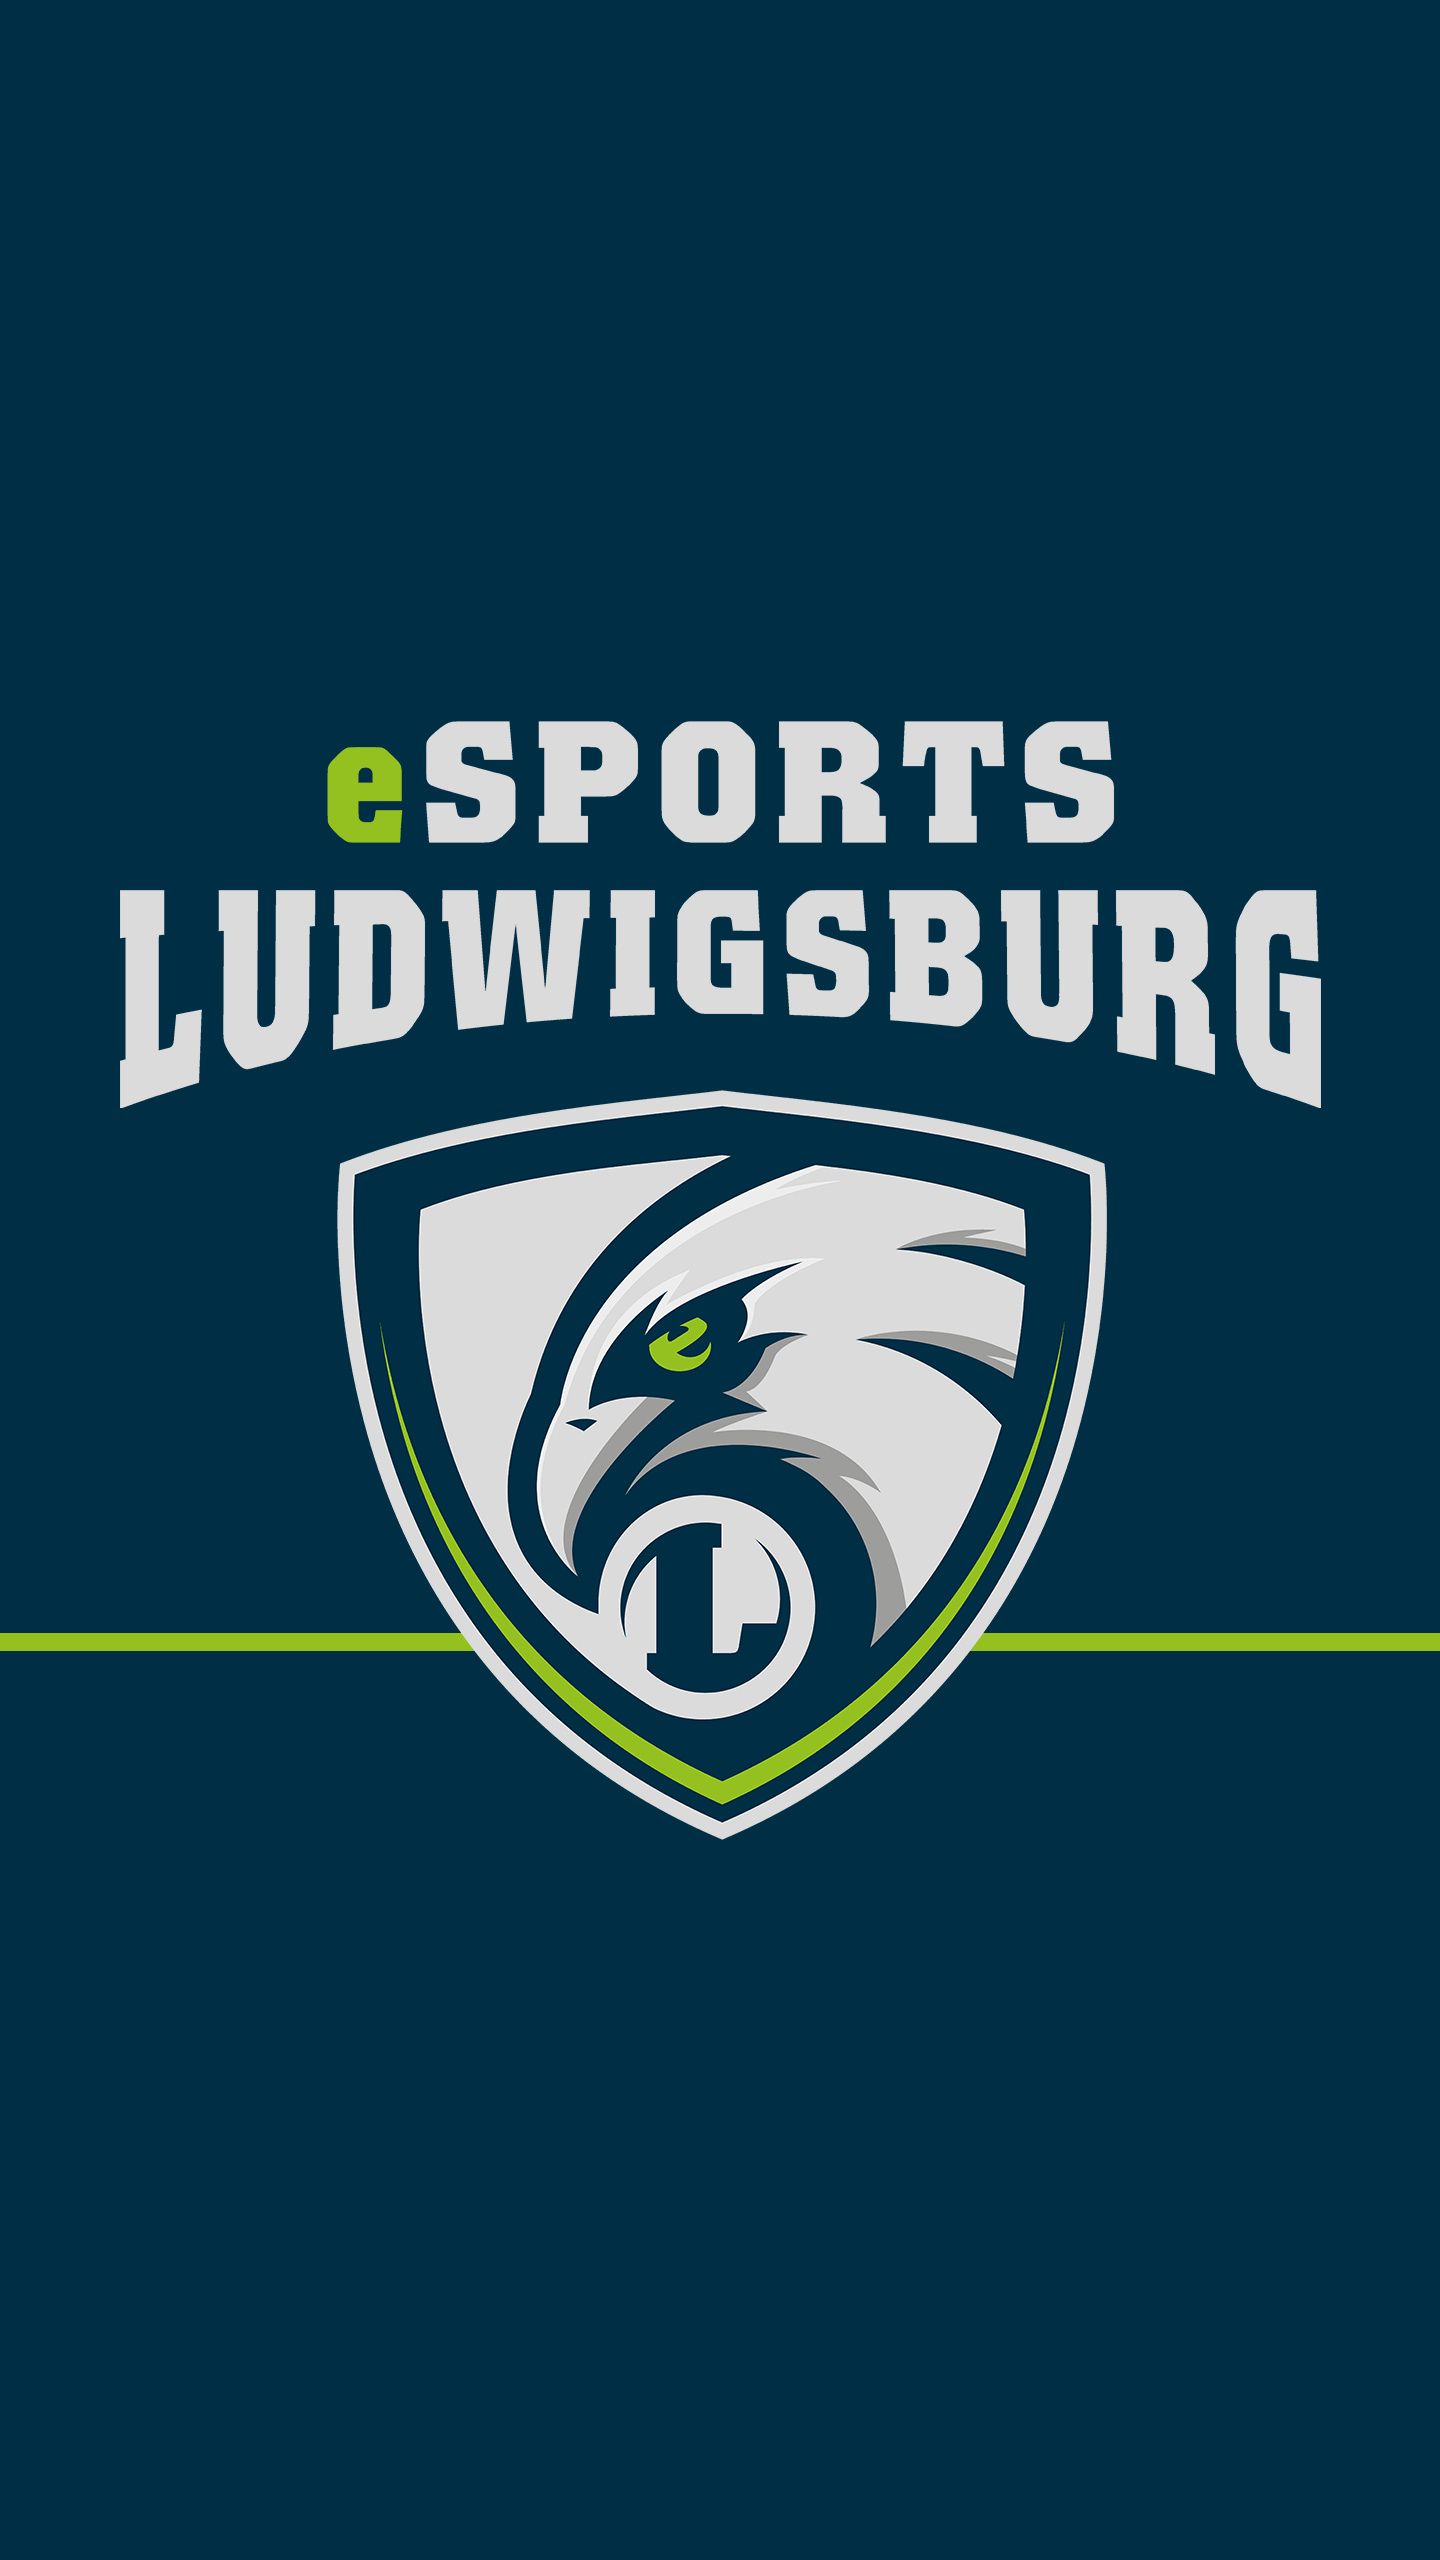 Esports: eSports Ludwigsburg Hearthstone team emblem, Competitive gaming. 1440x2560 HD Wallpaper.